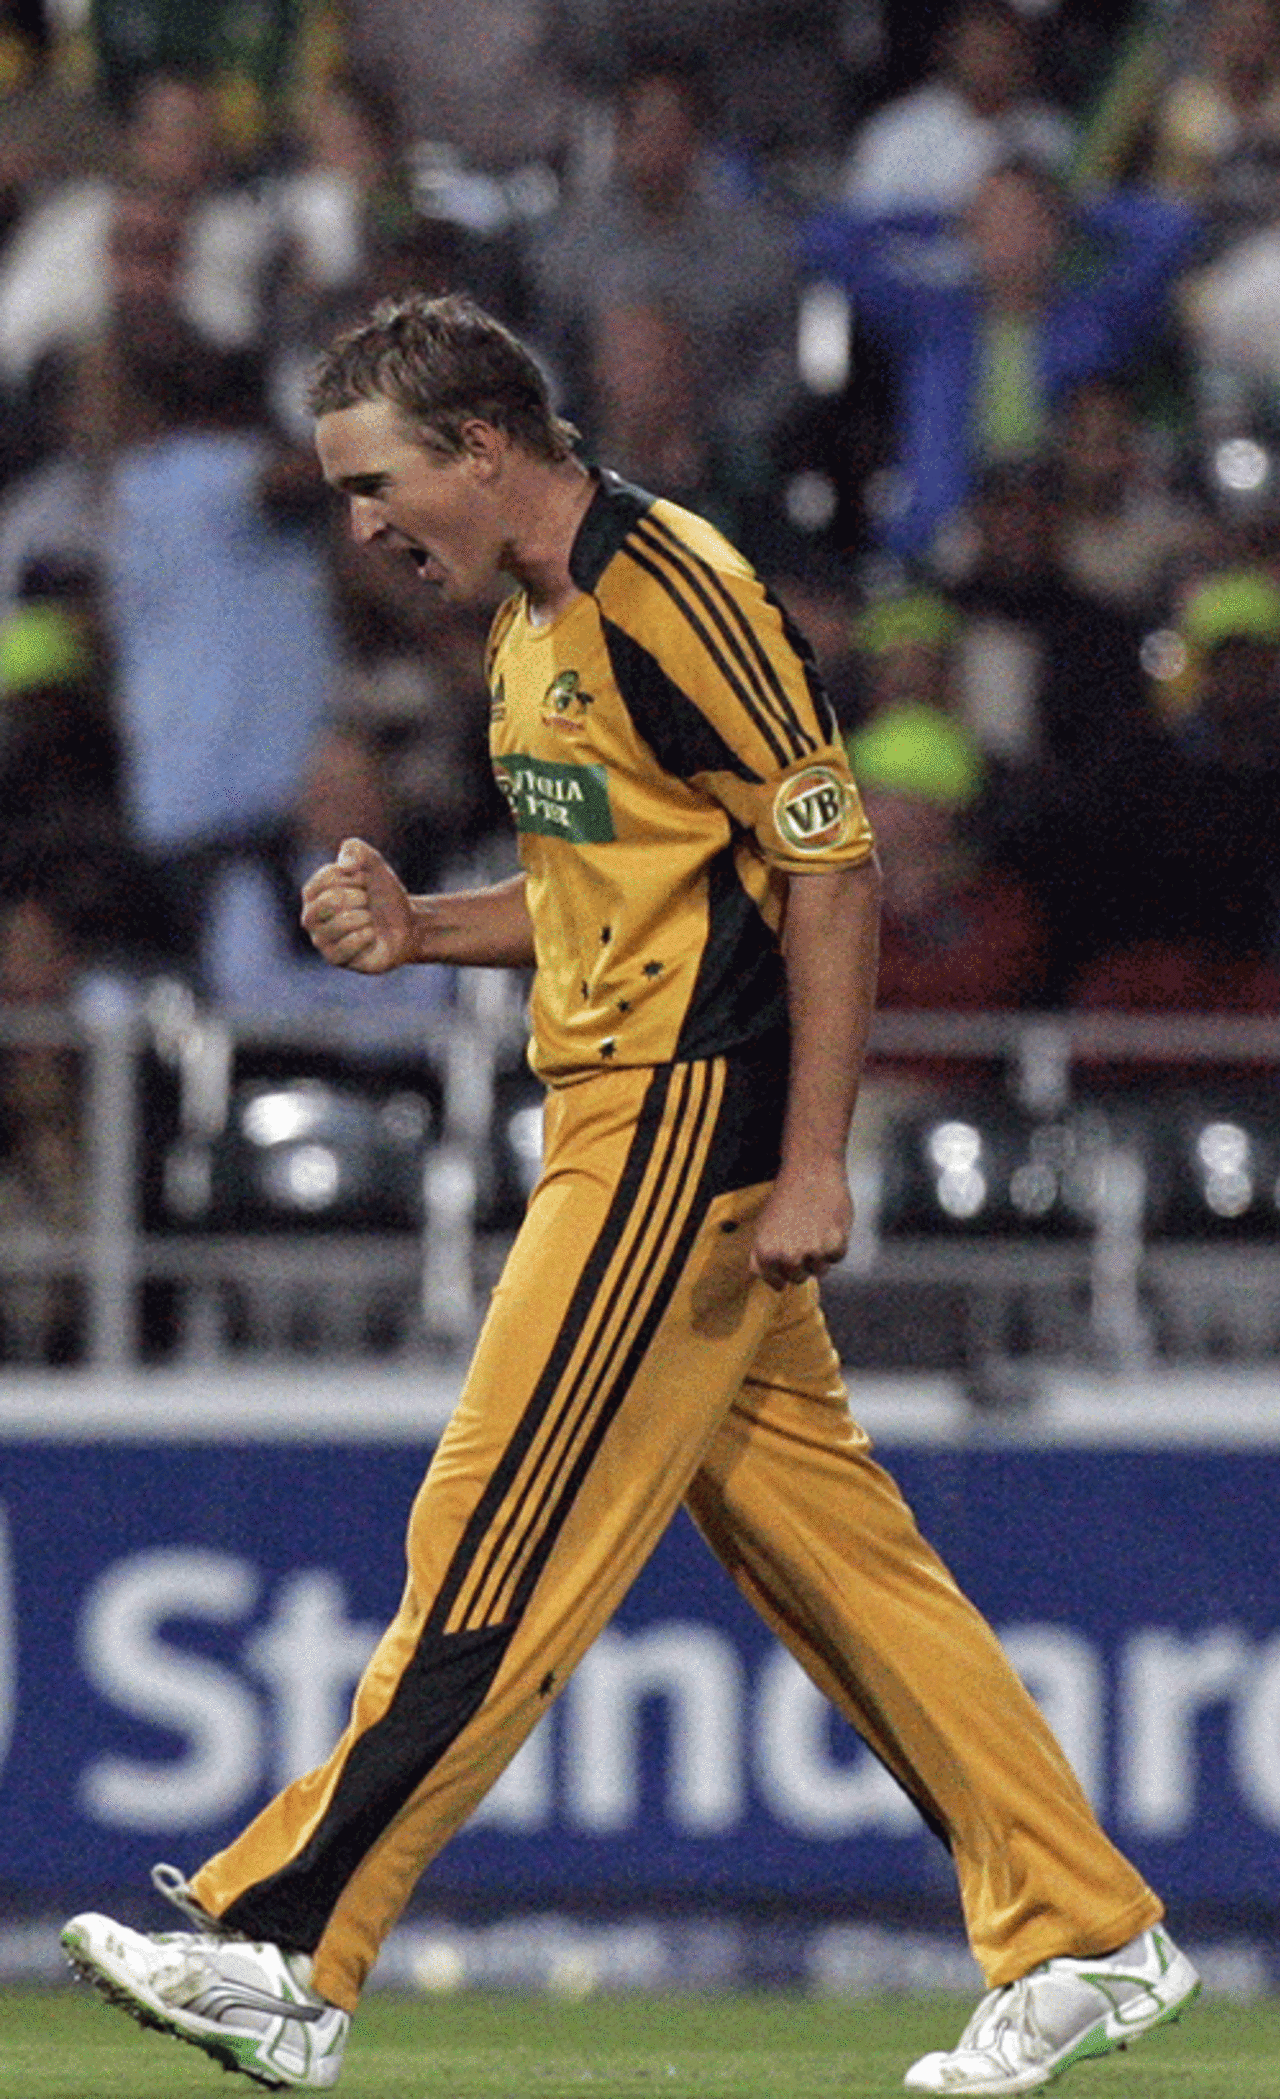 Nathan Hauritz celebrates a wicket, South Africa v Australia, 5th ODI, Johannesburg, April 17, 2009